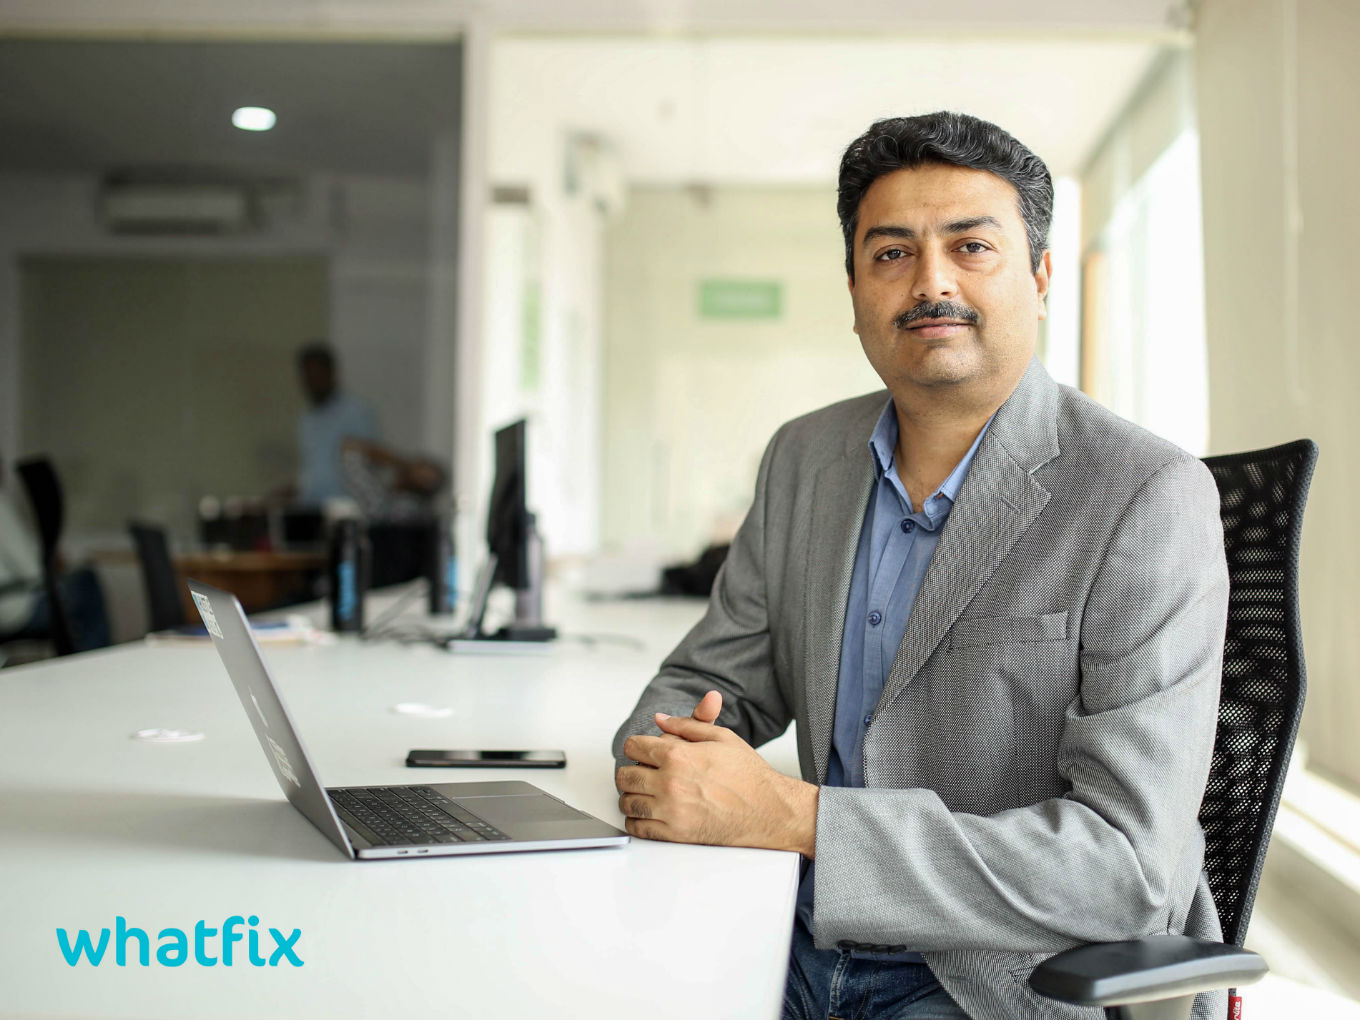 Whatfix Raises $13.2 Mn To Finance Headcount, Tech Expansion